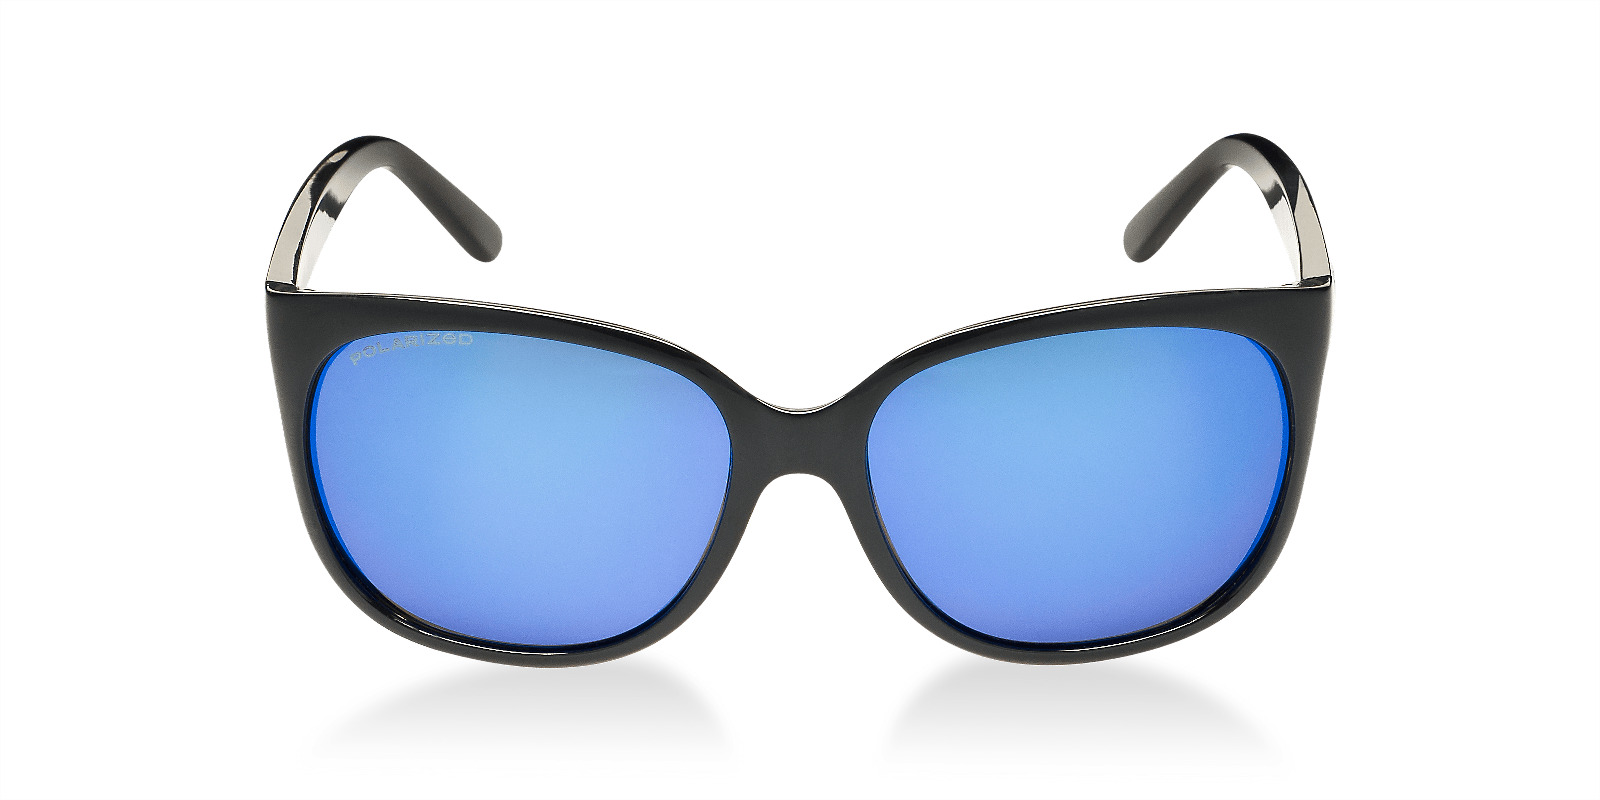 Sunglasses Closeup PNG icons